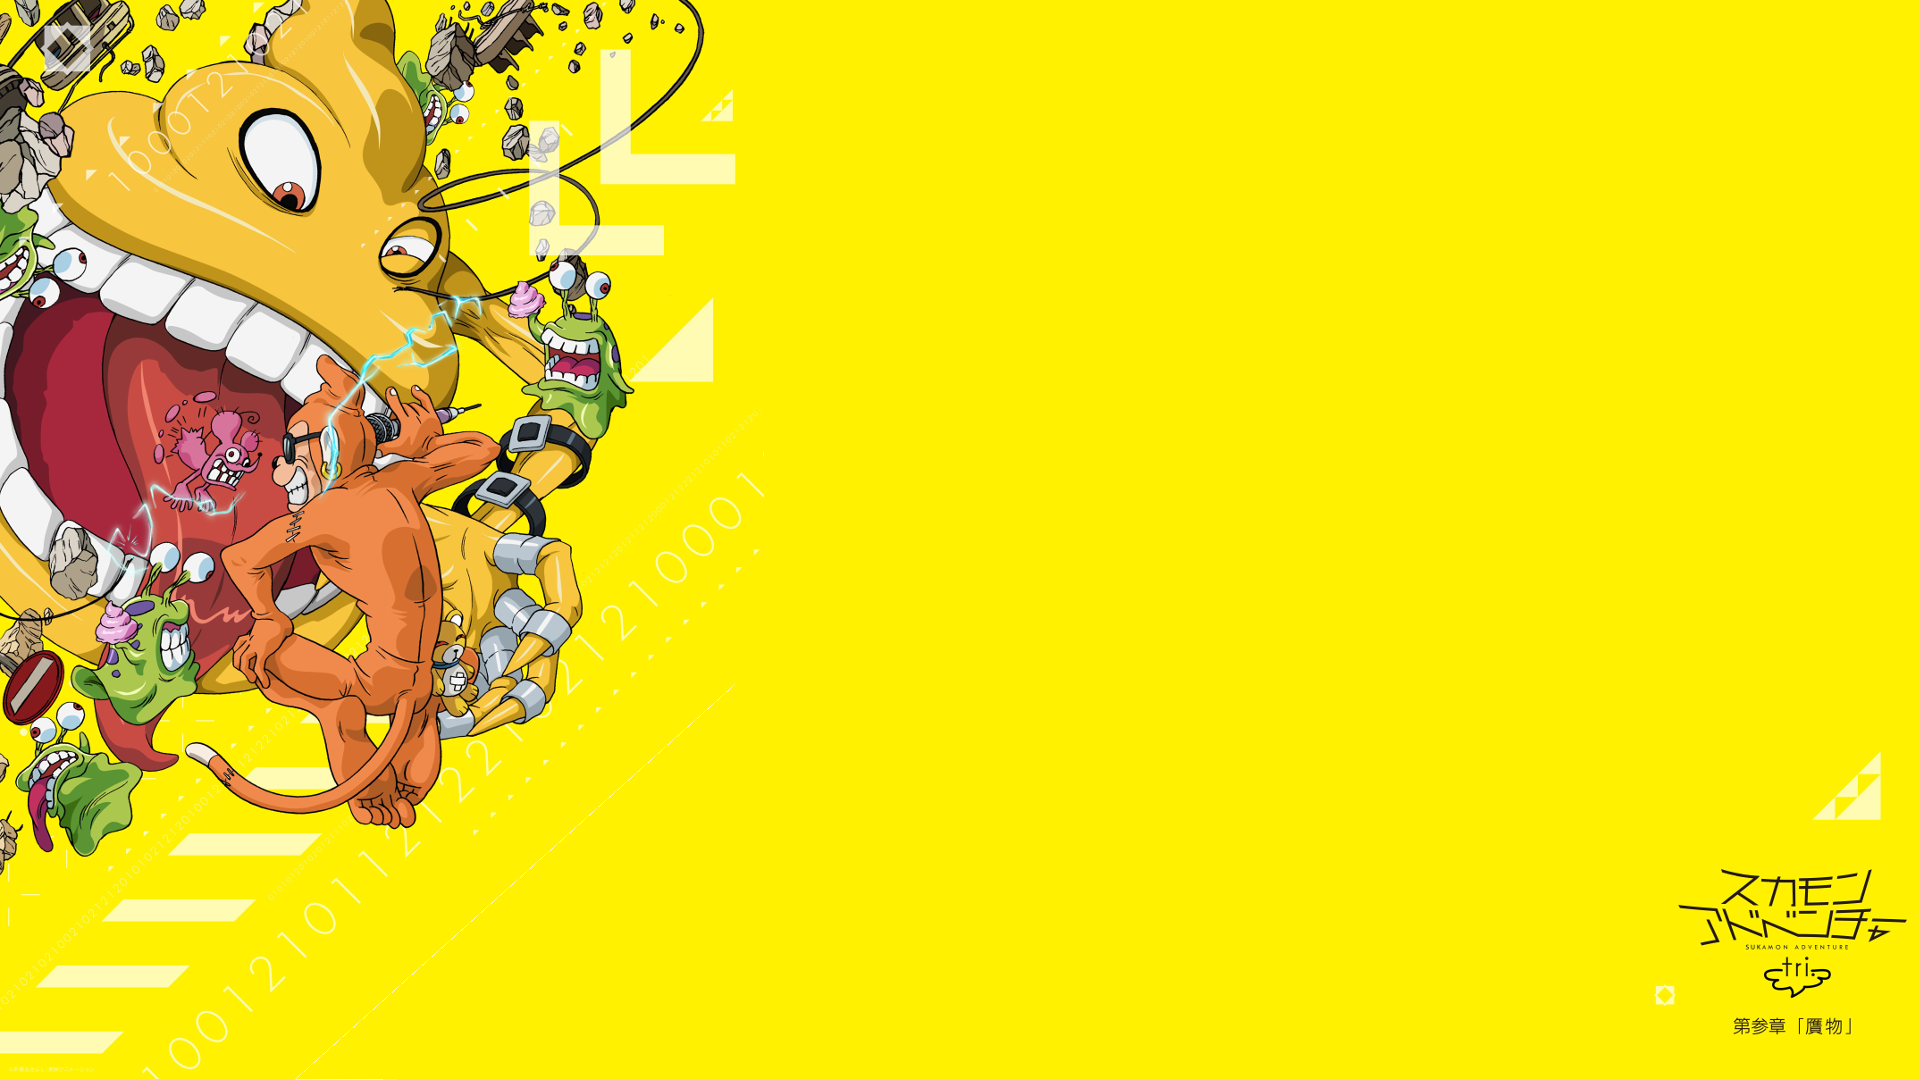 Anime 1920x1080 anime Digimon minimalism yellow yellow background simple background